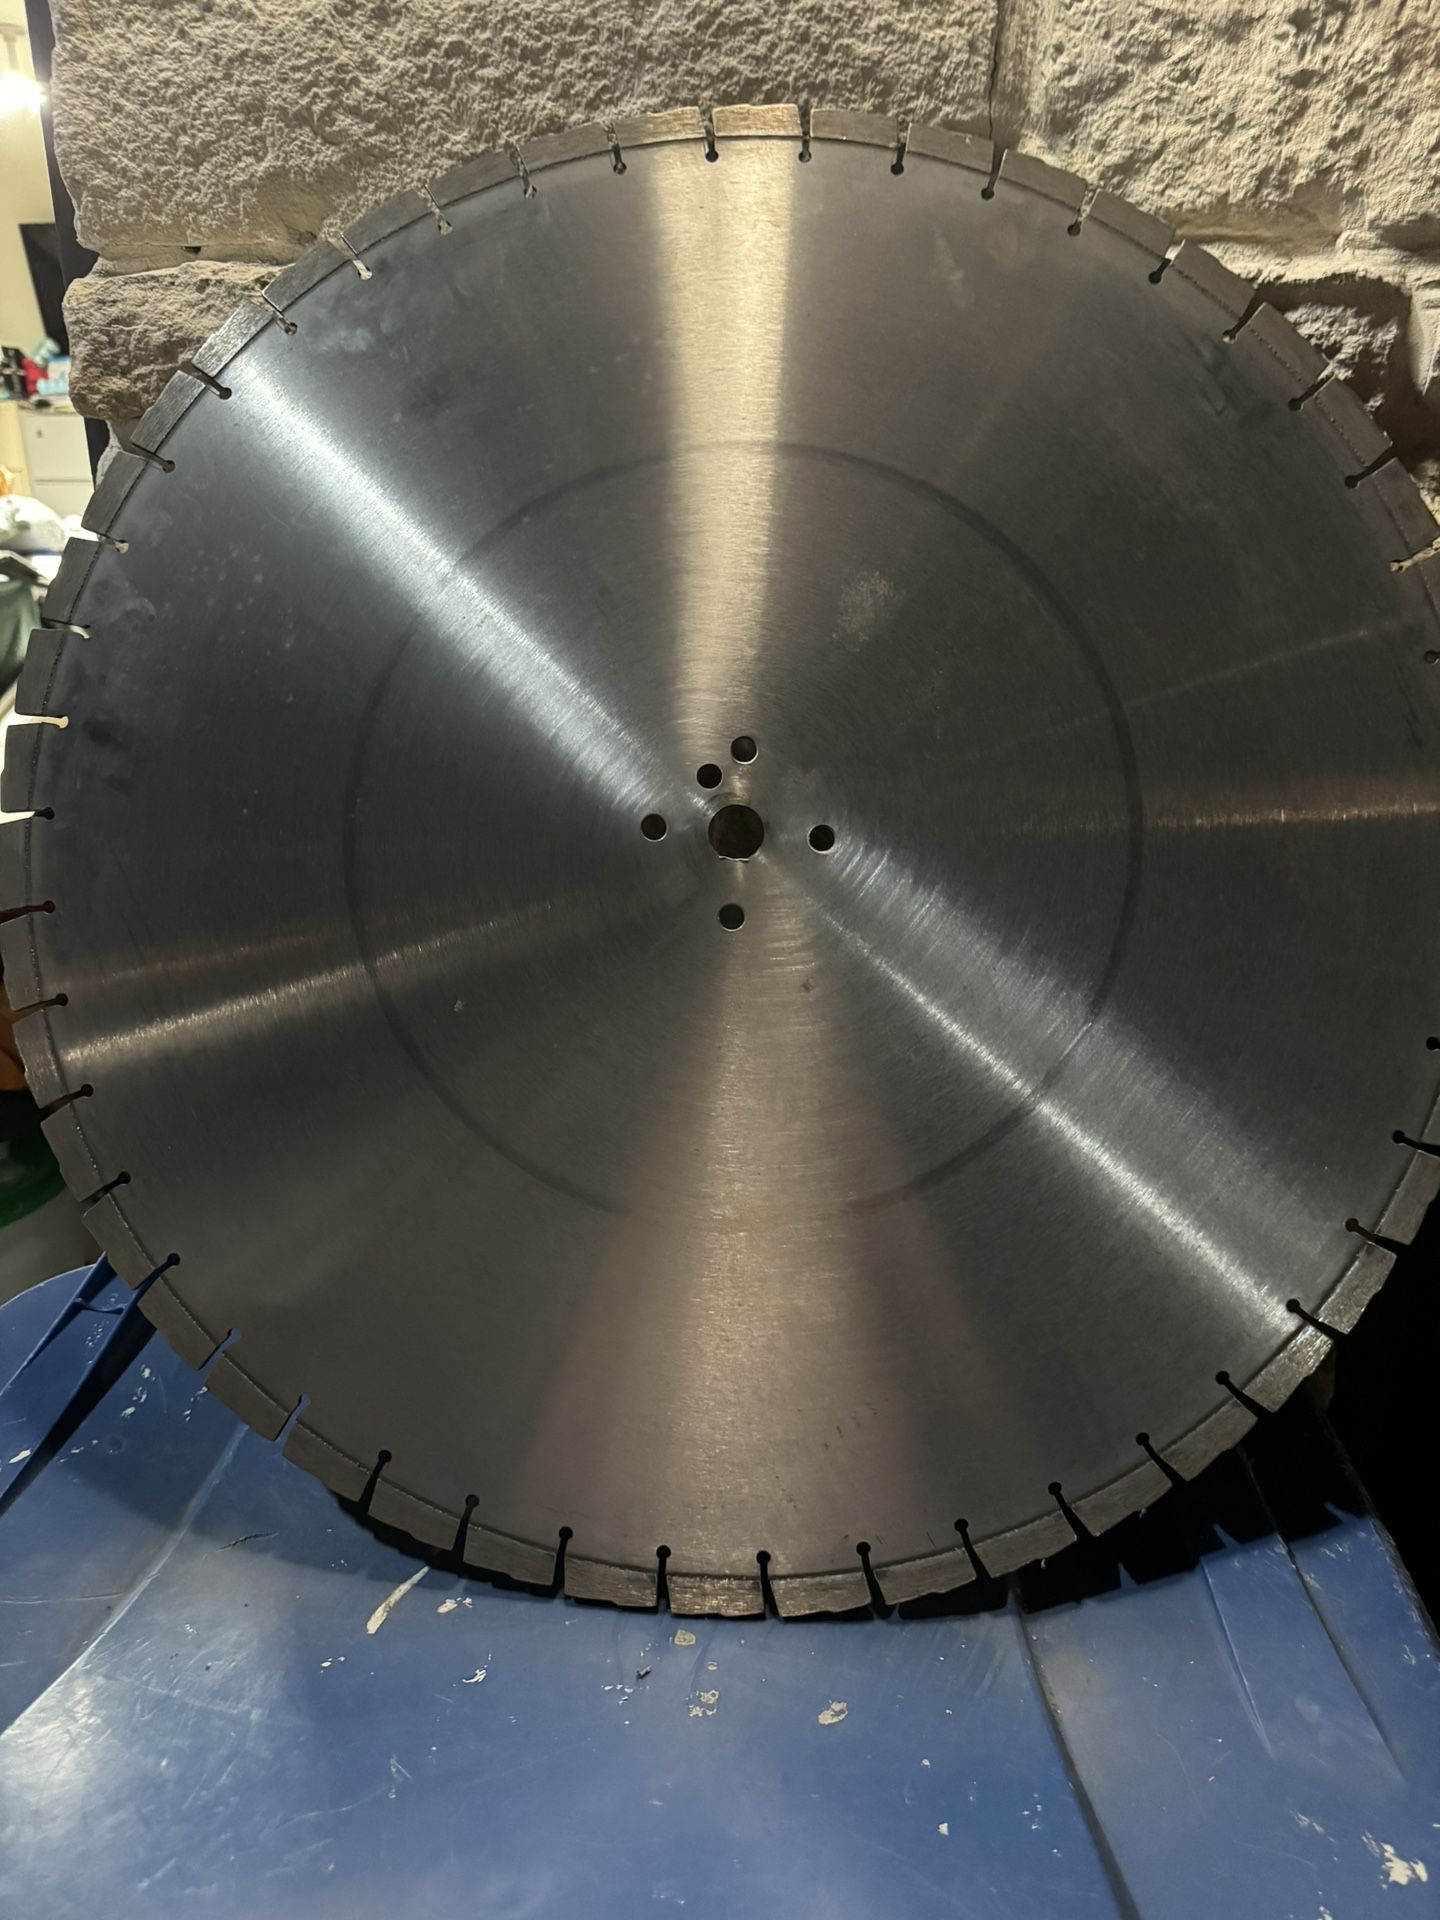 26” X 2.00 Mm Concrete Cutting Disk